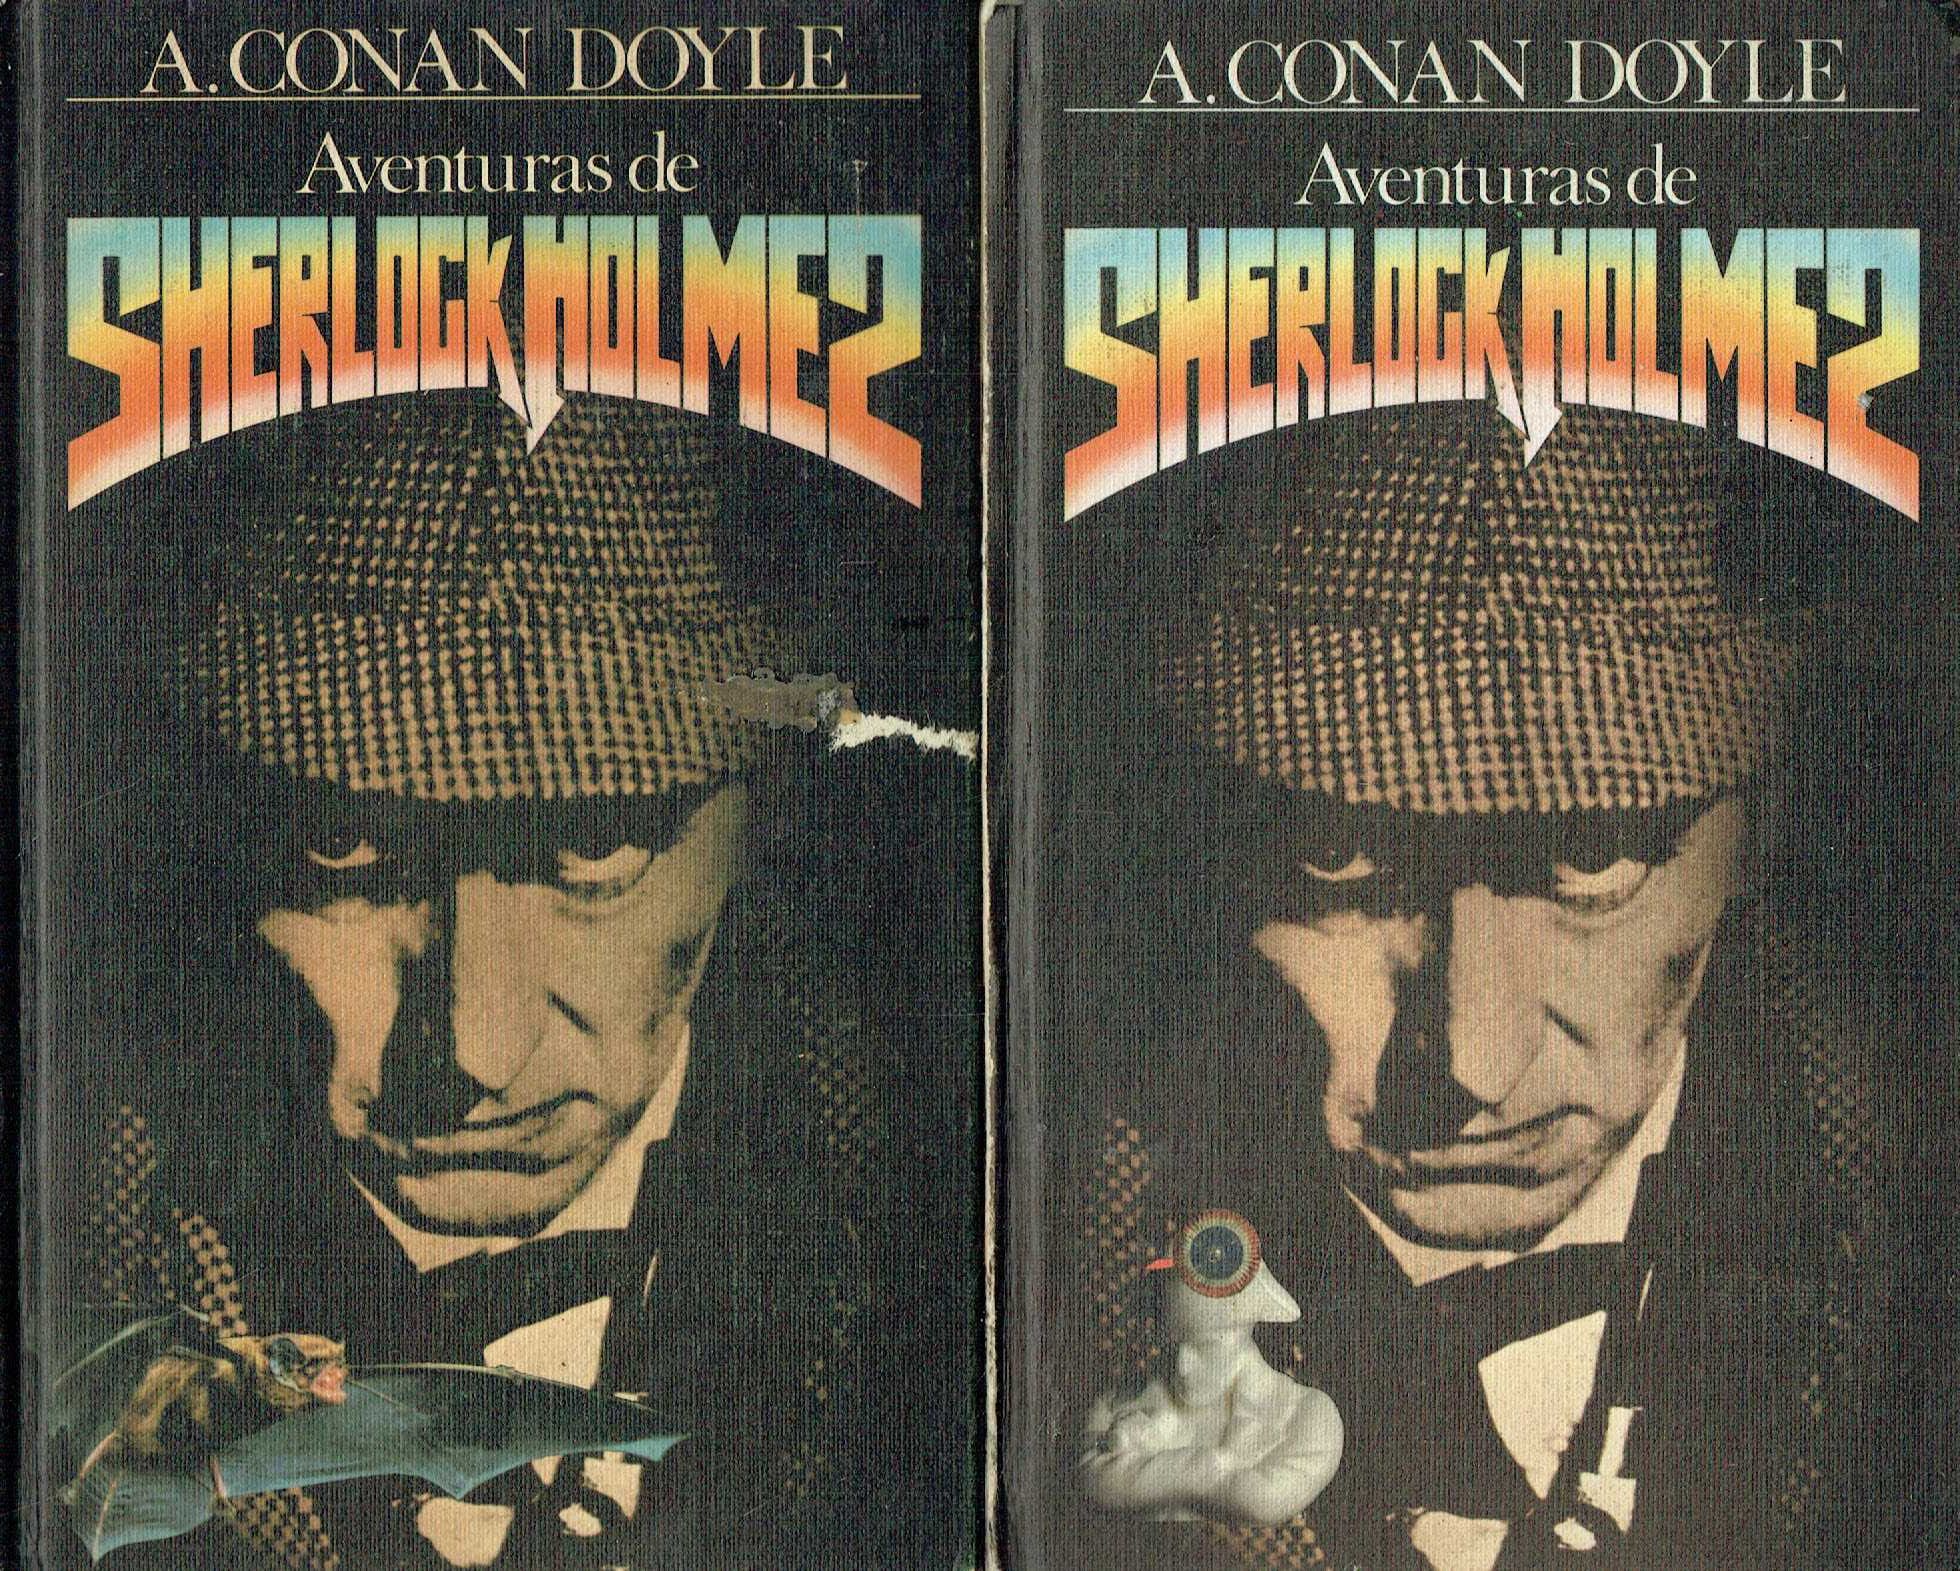 10276

Aventuras de Sherlock Holmes
de Conan Doyle